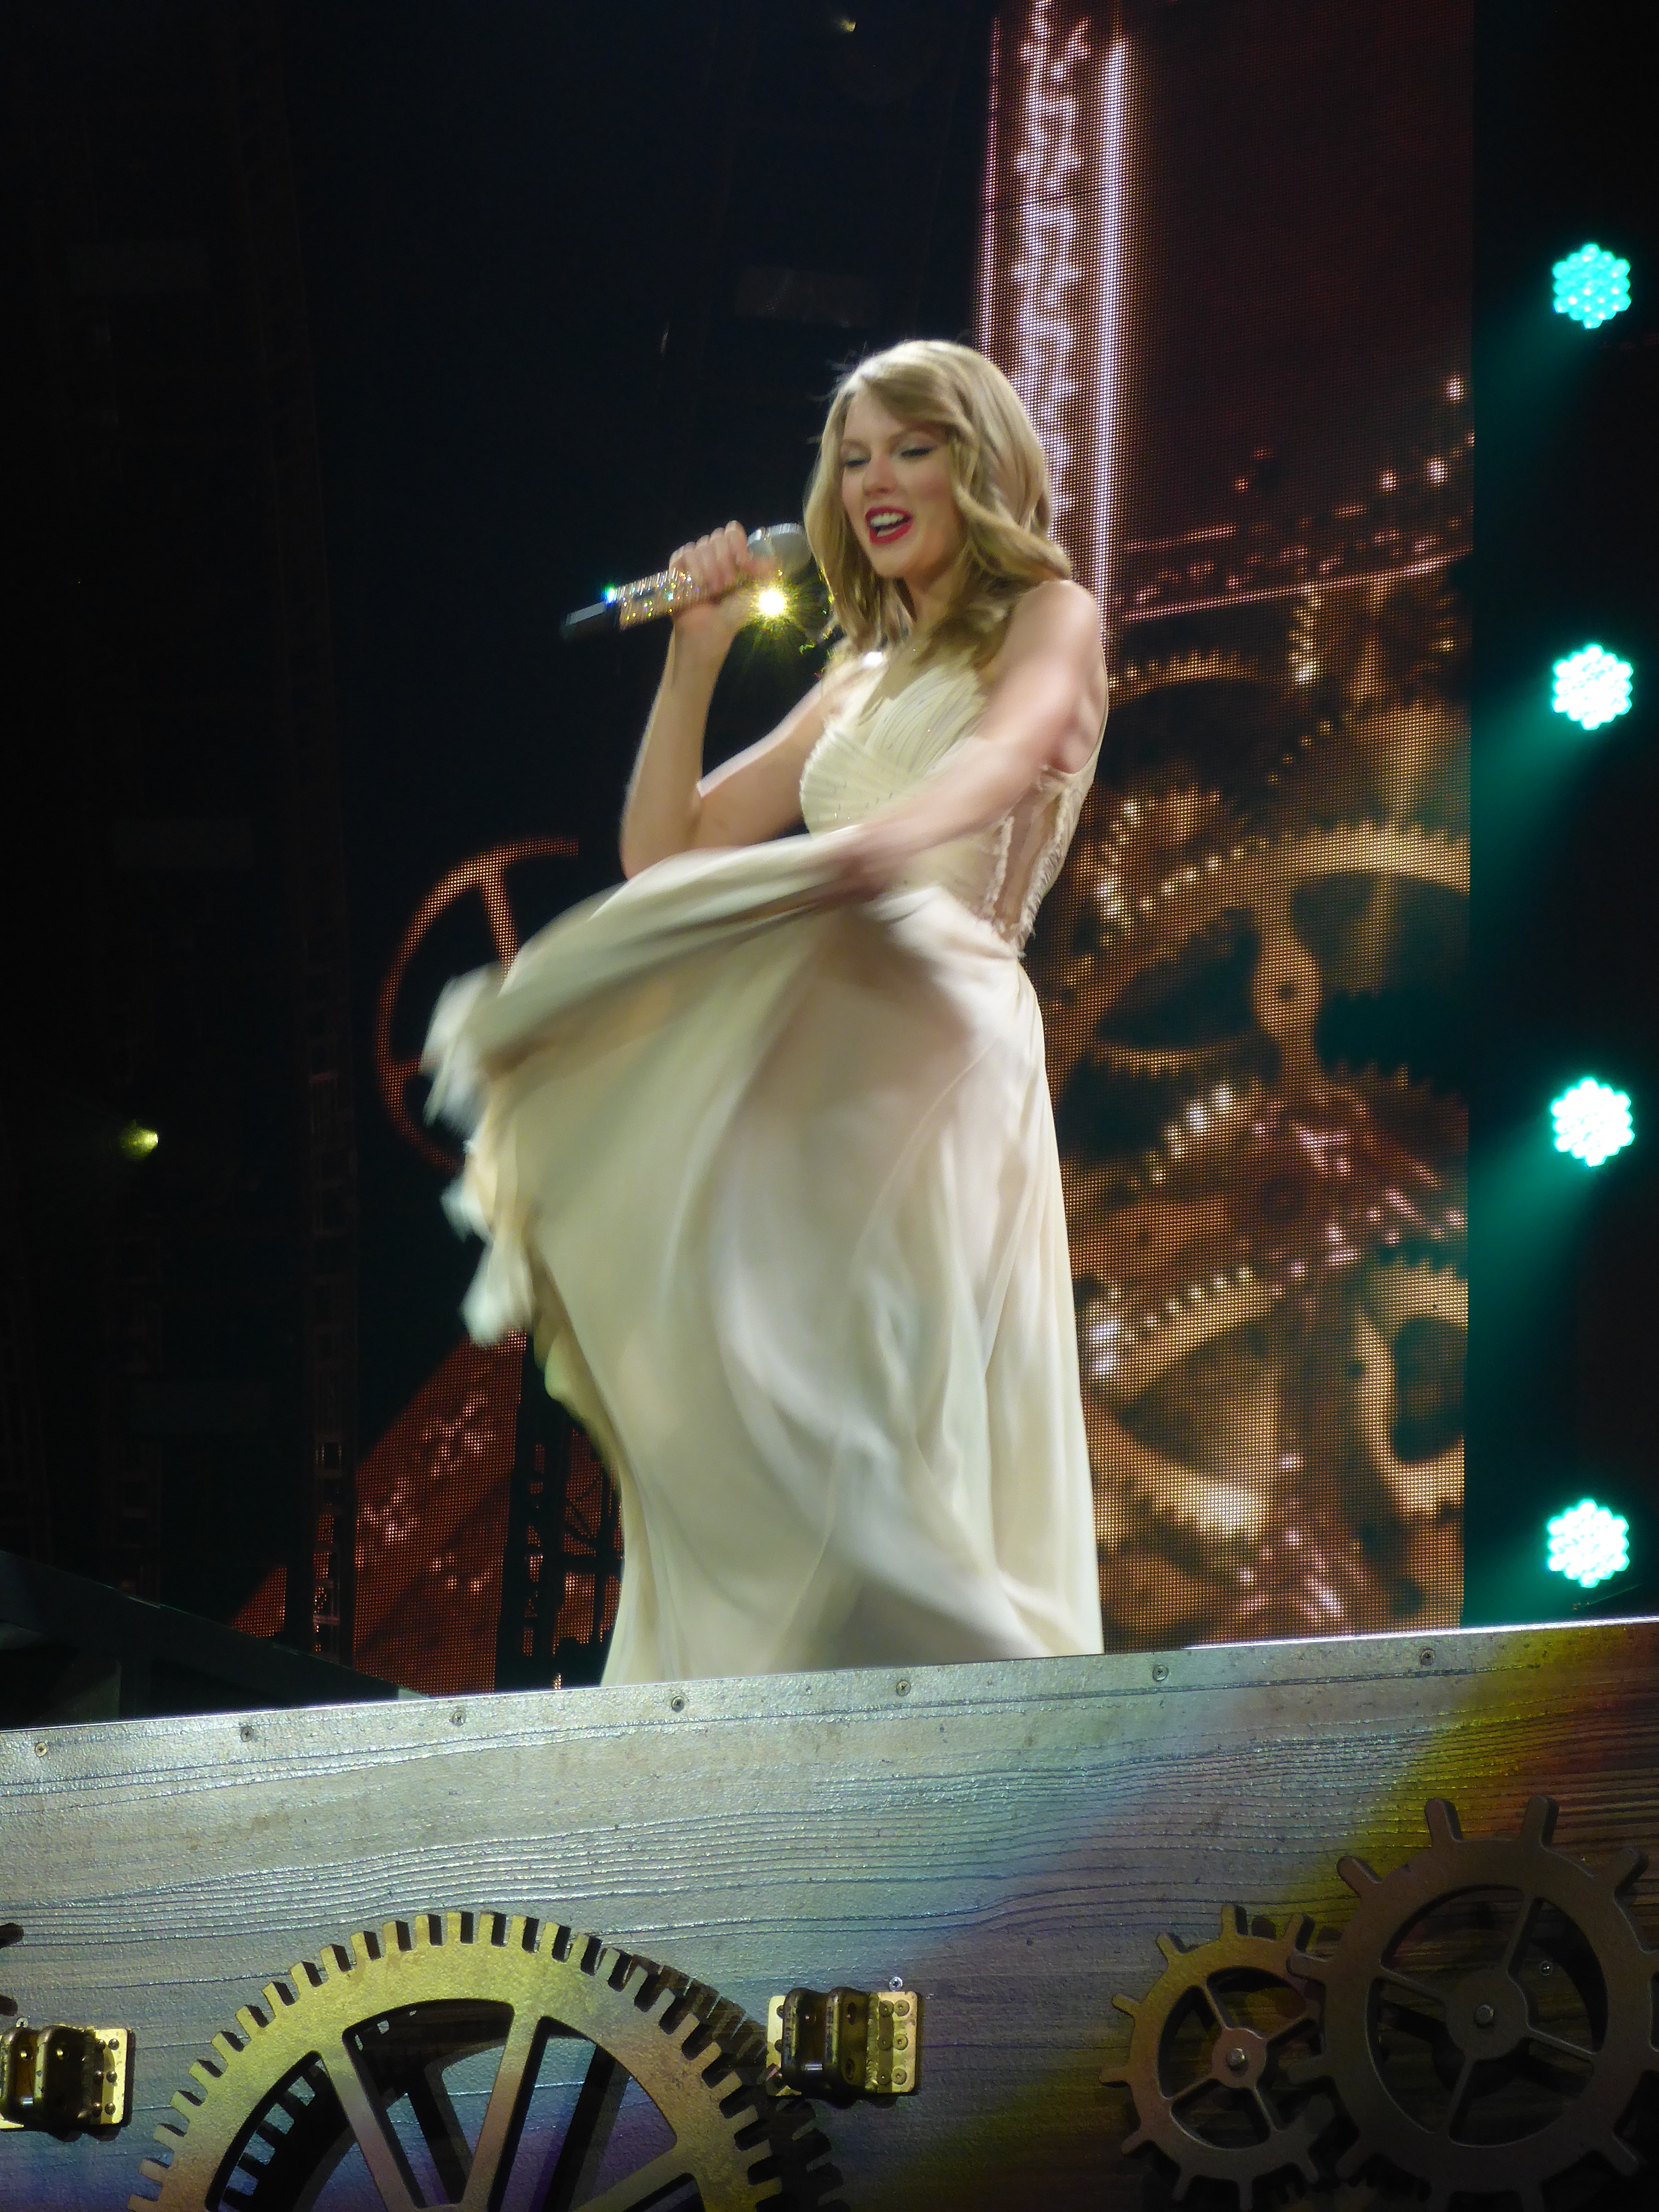 February 1 - London, United Kingdom - 074 - Taylor Swift Web Photo